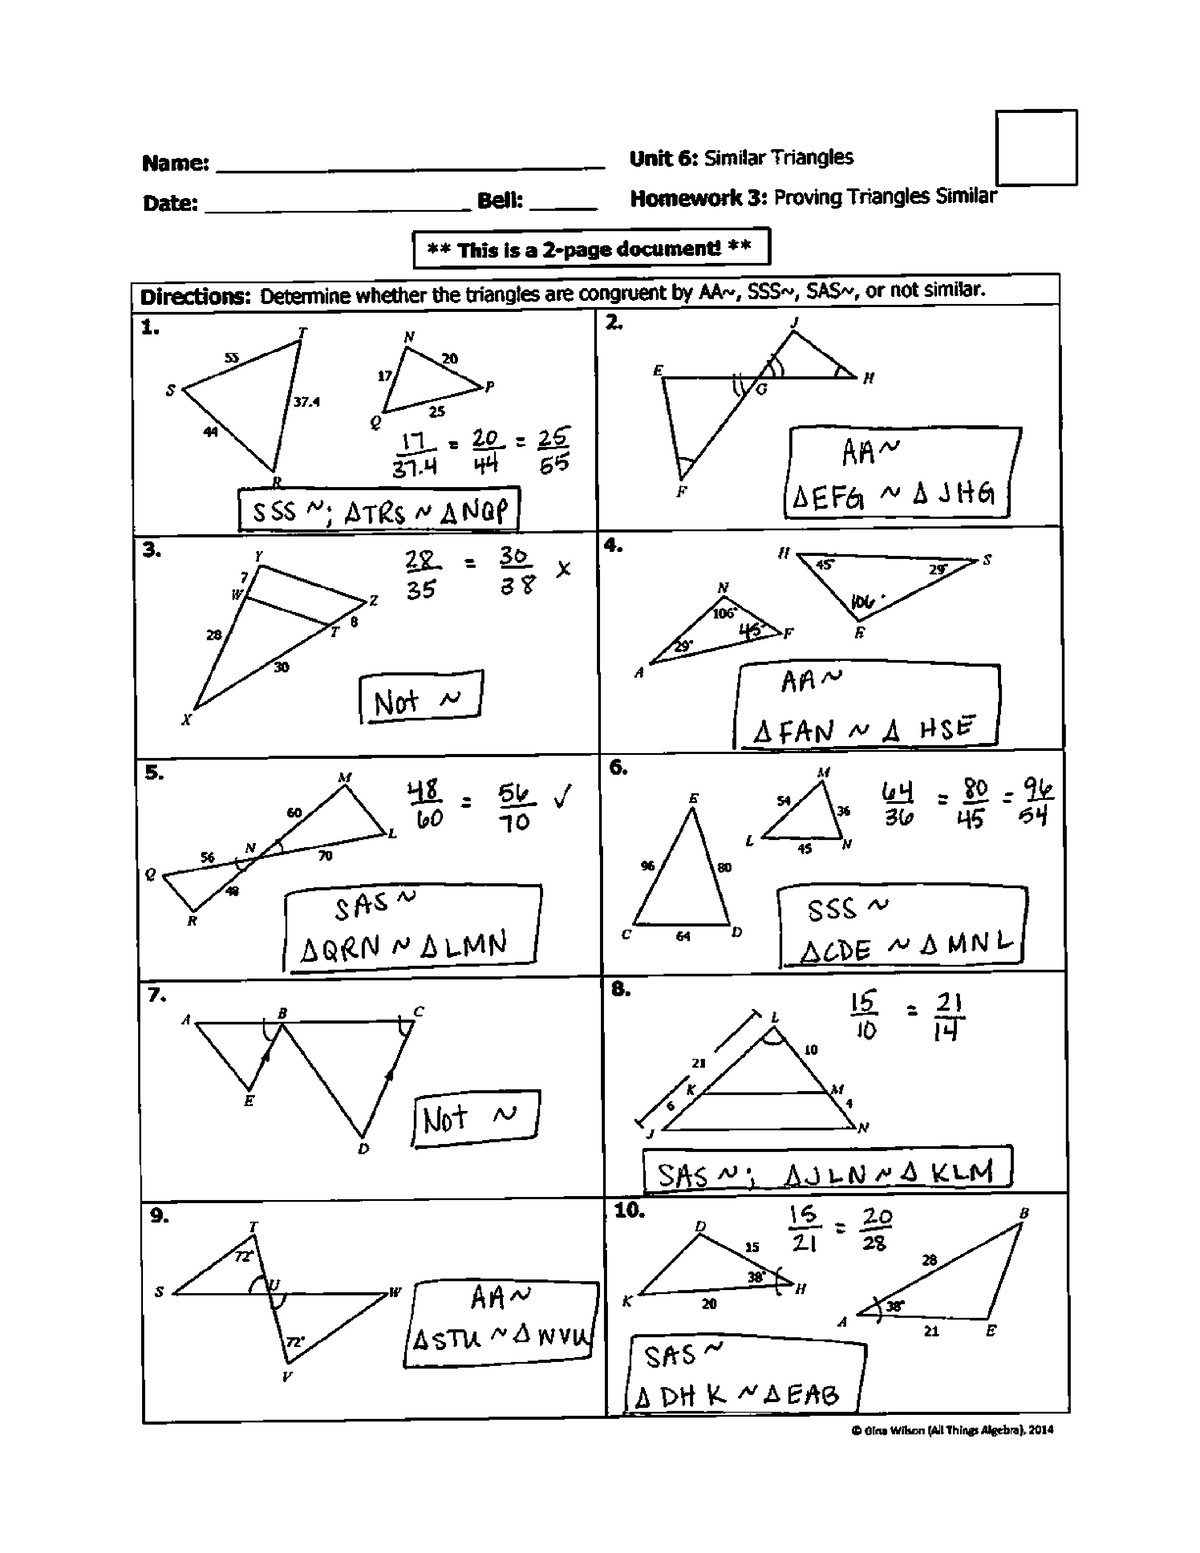 unit 6 homework 3 proving triangles similar